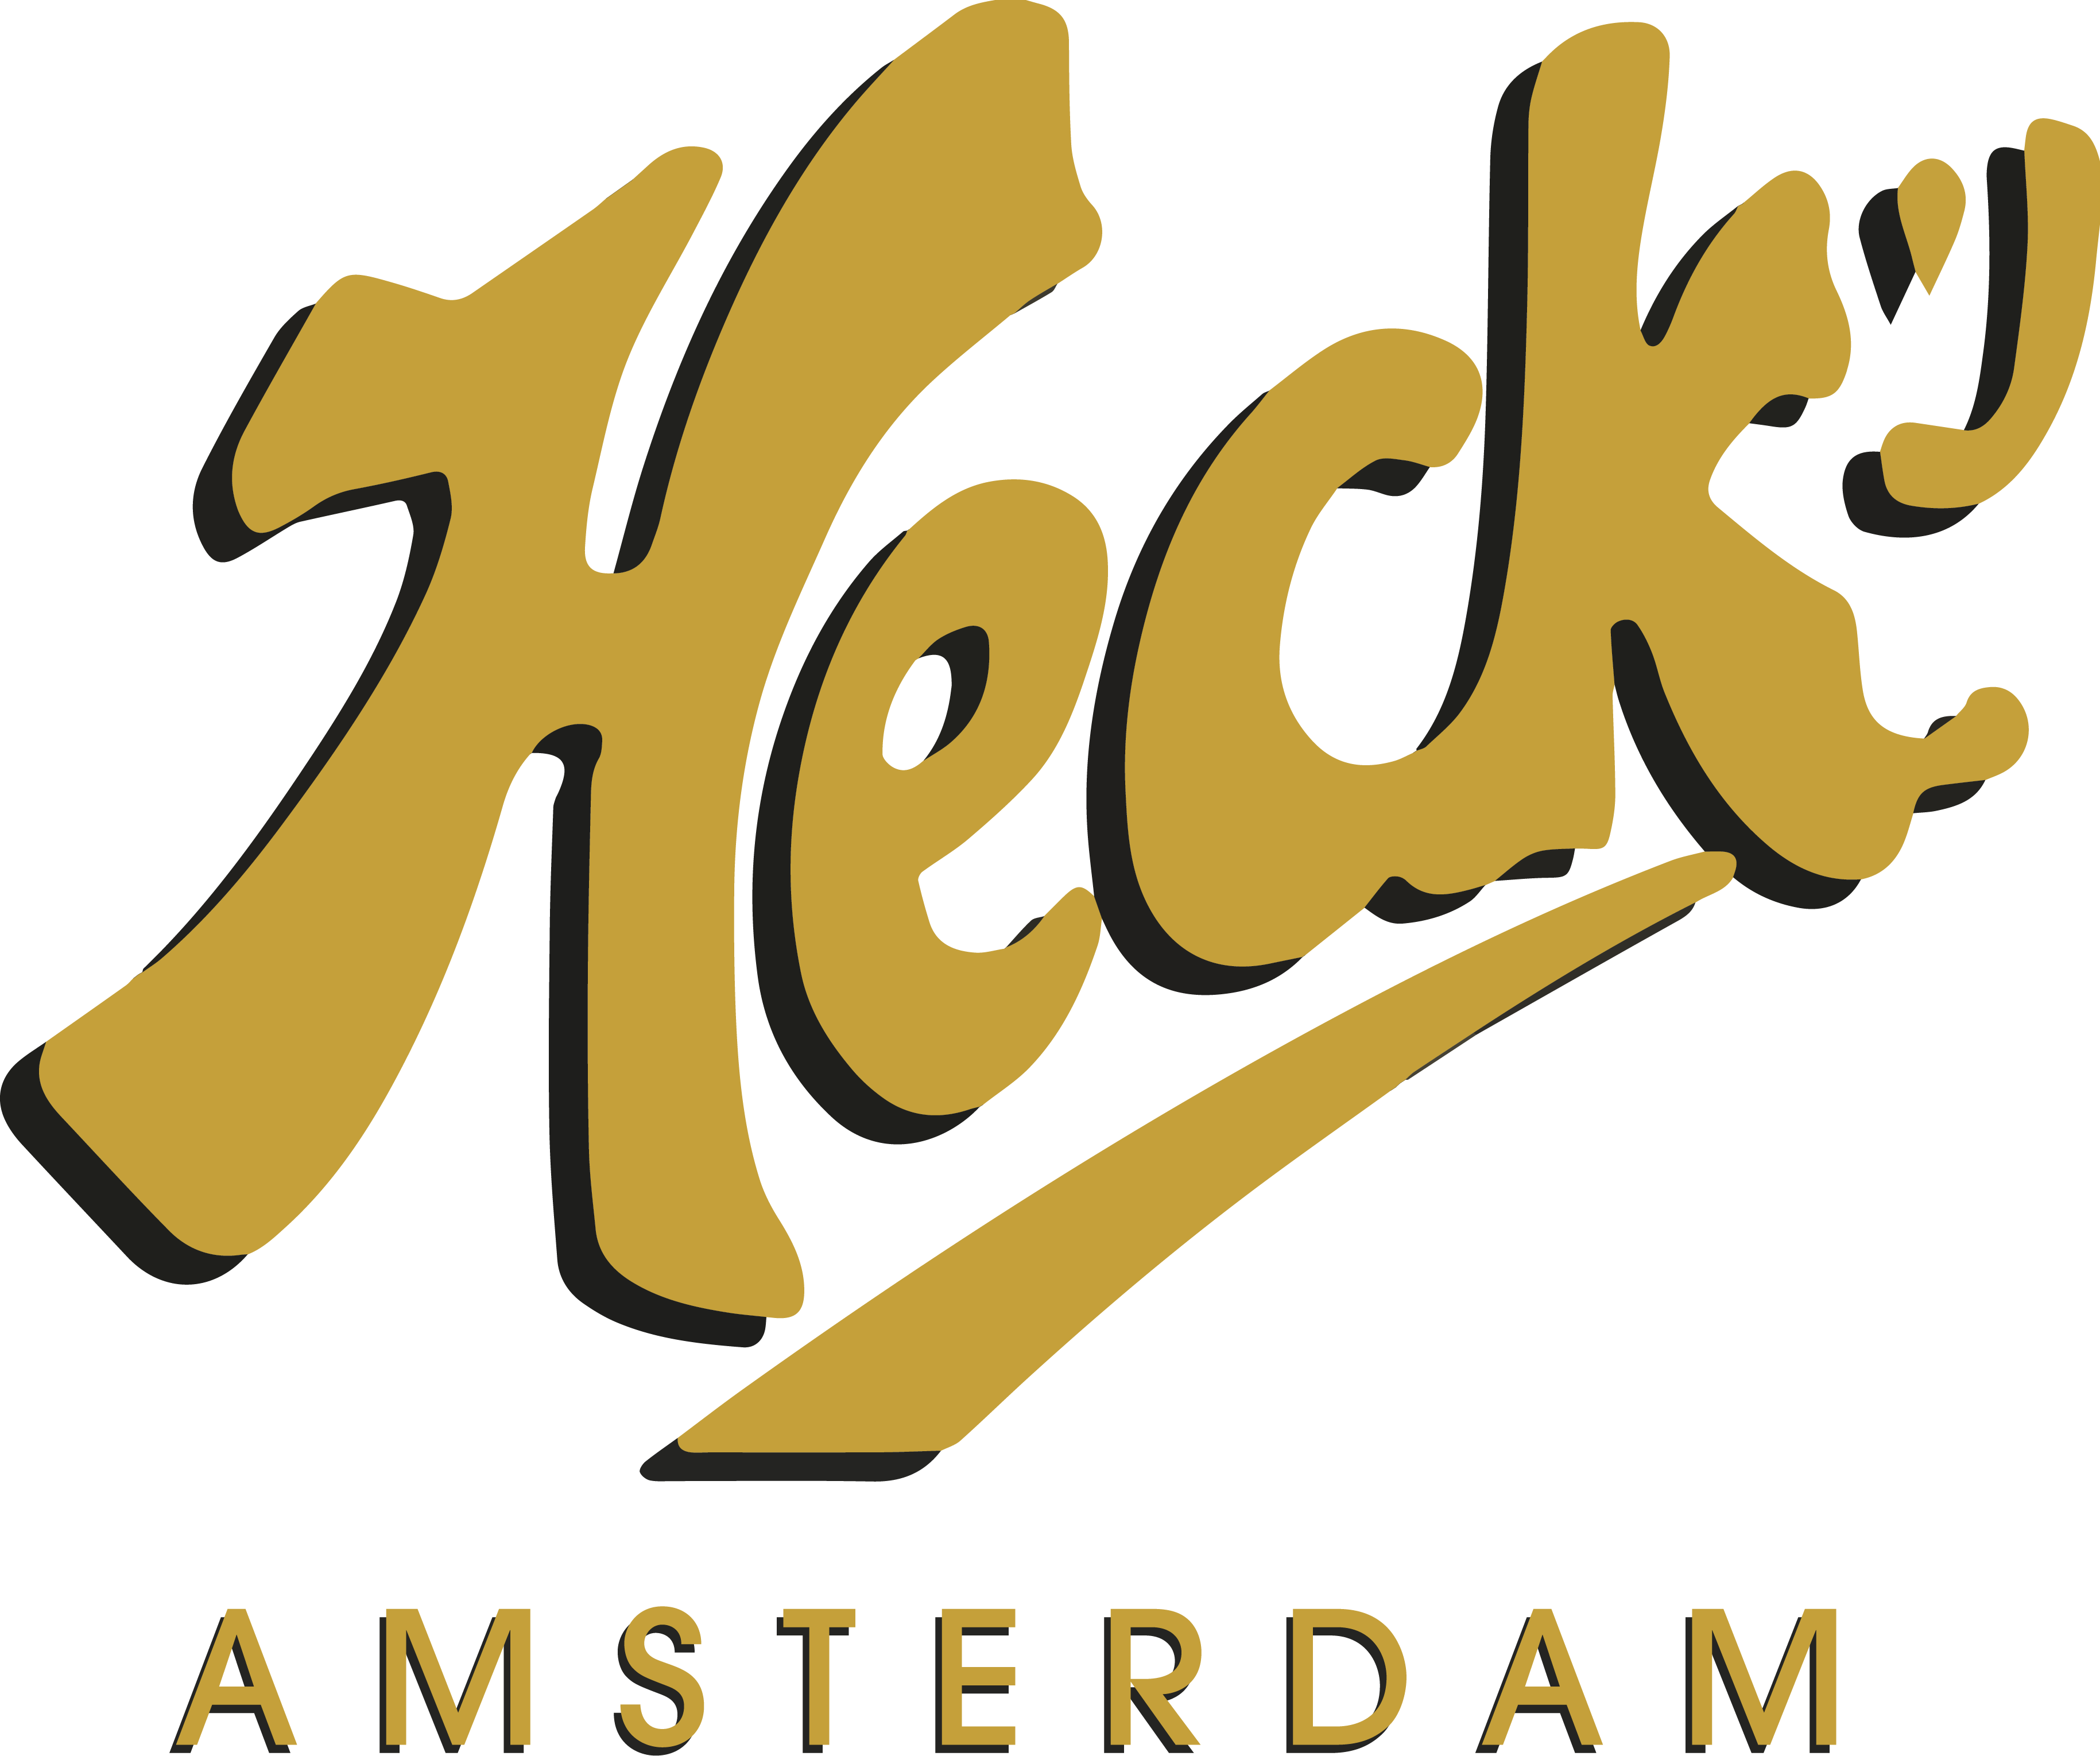 Heck's Amsterdam